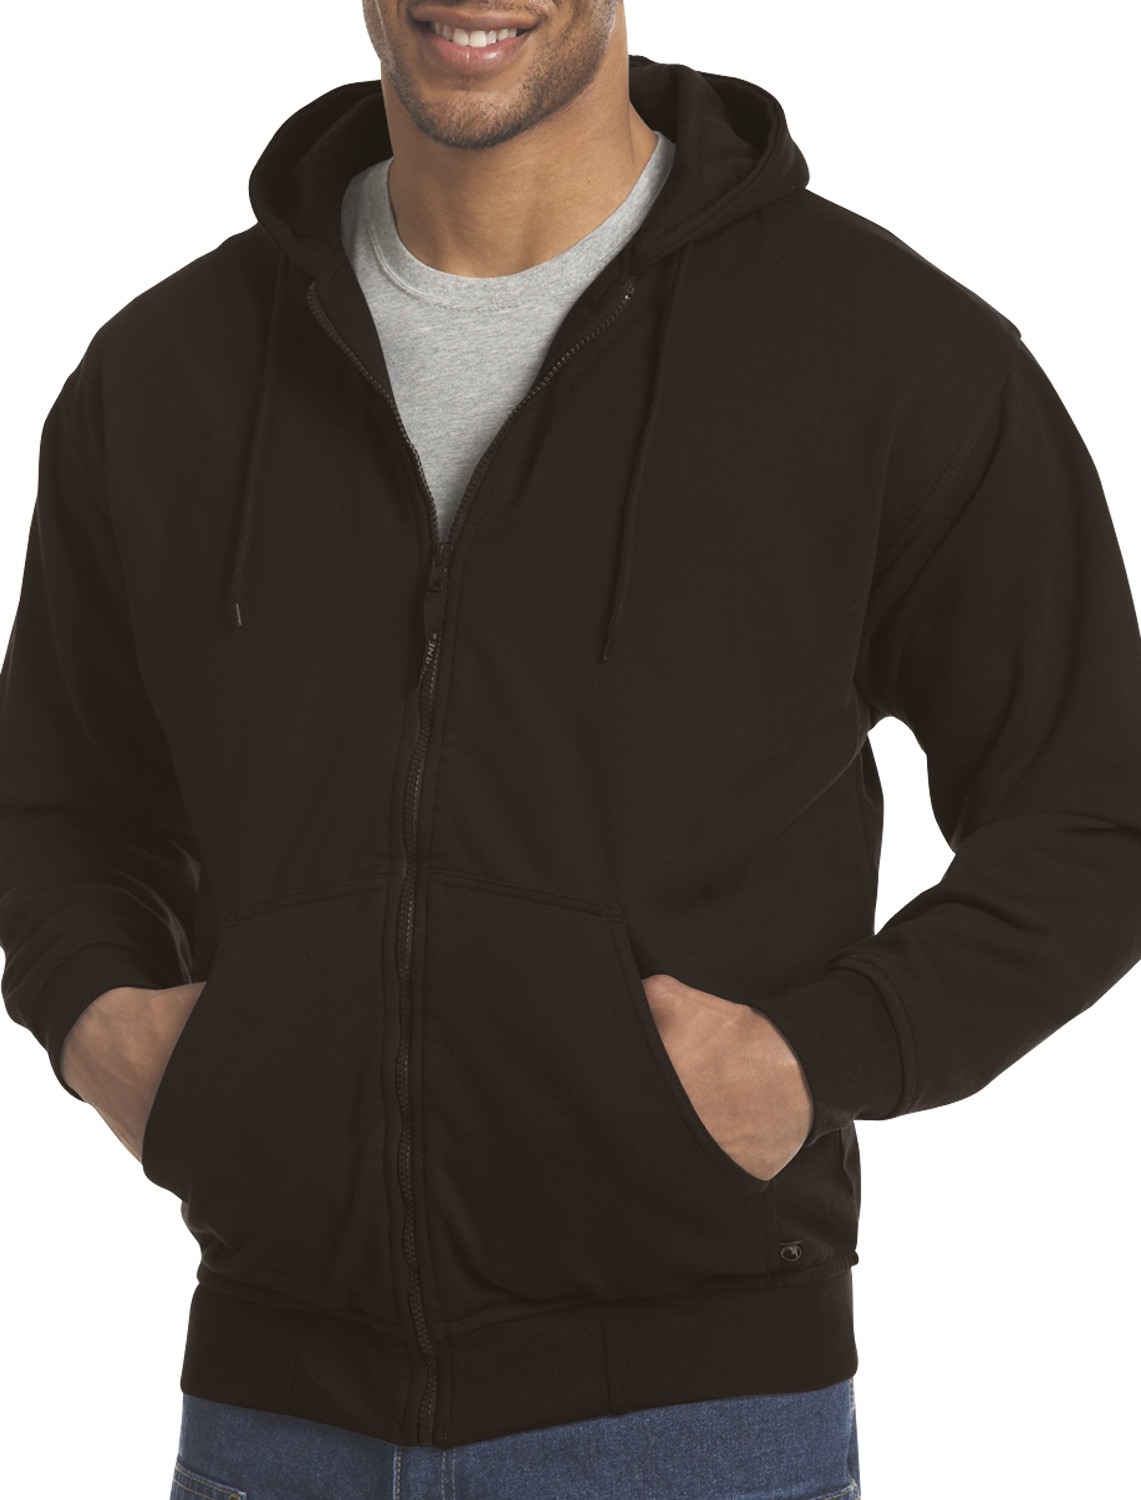 Big + Tall, Berne Original Hooded Thermal-Lined Sweatshirt